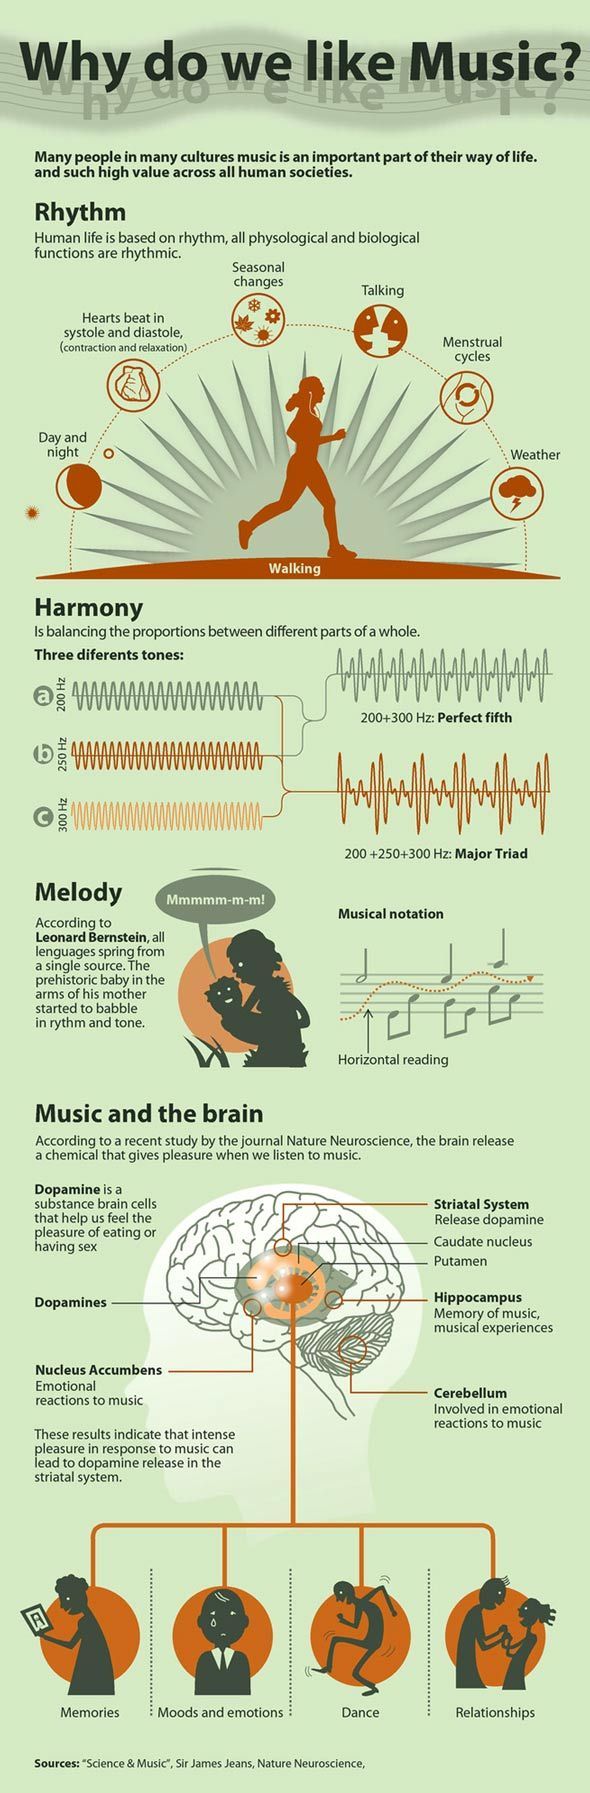 Why Do We Like Music? Because music